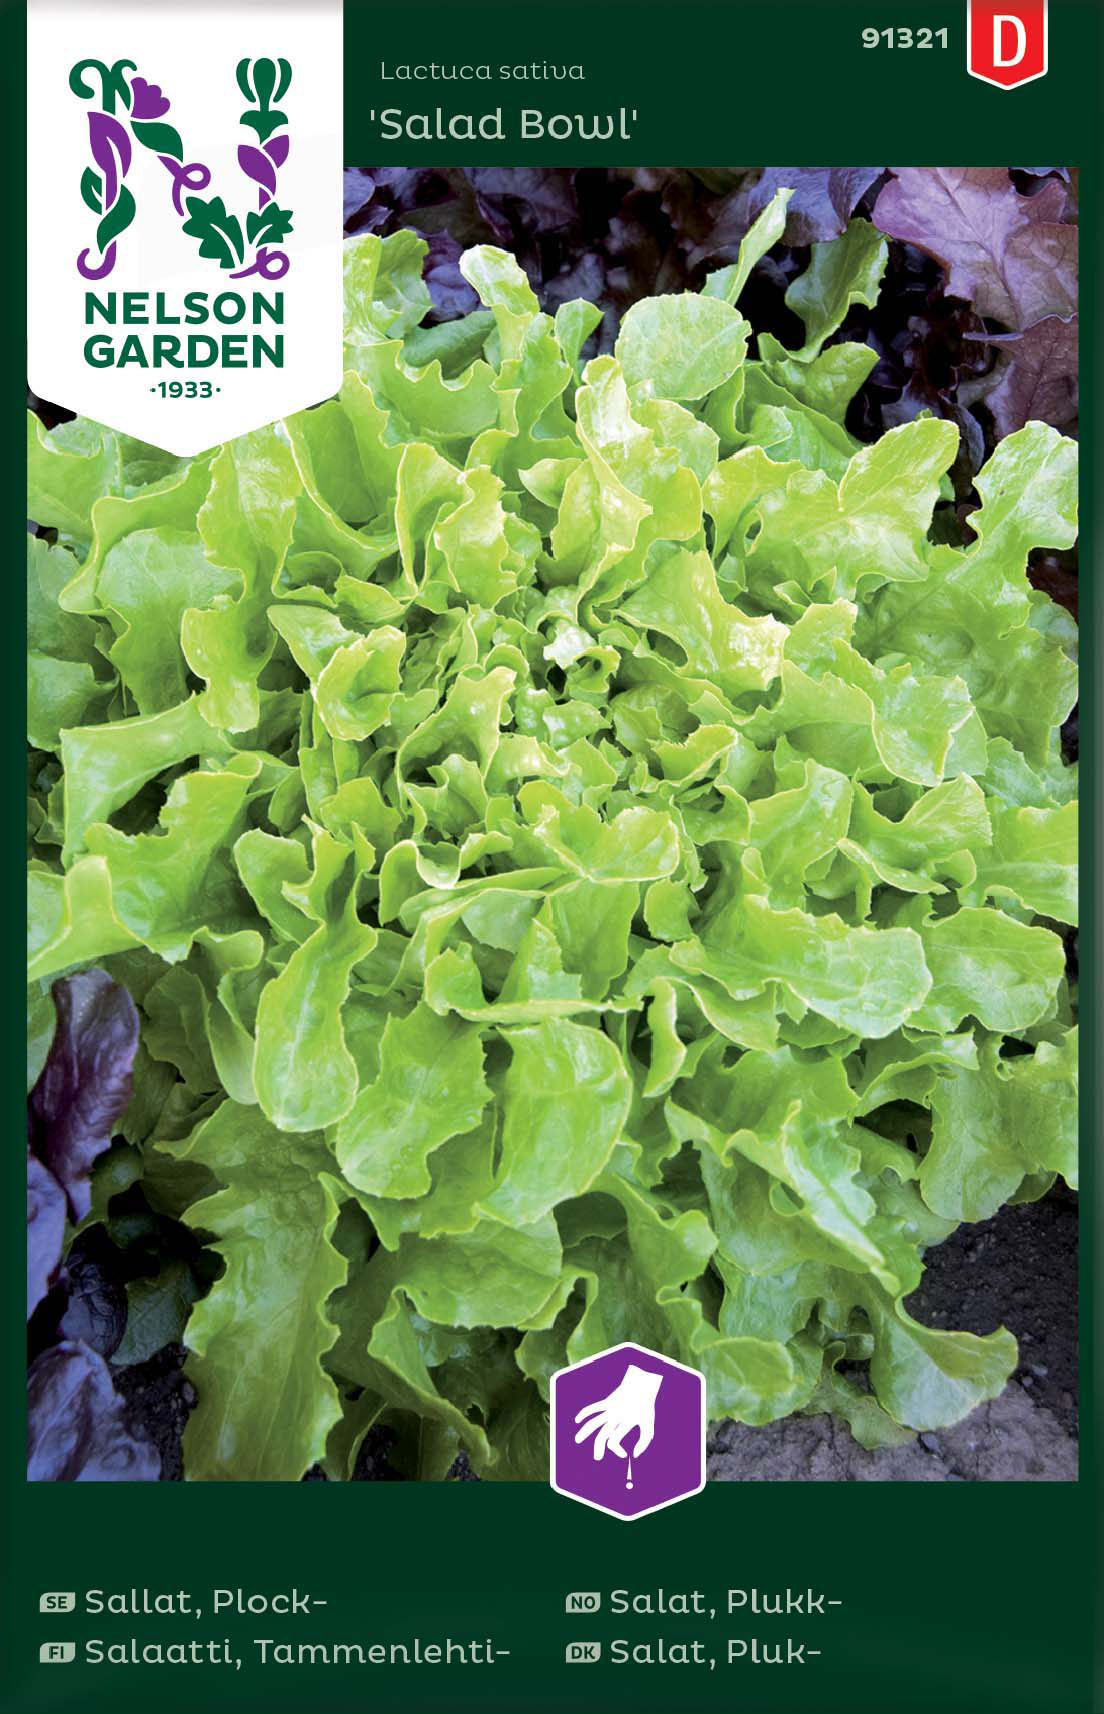 Fröer Nelson Garden Sallat Plock- Salad Bowl Grön